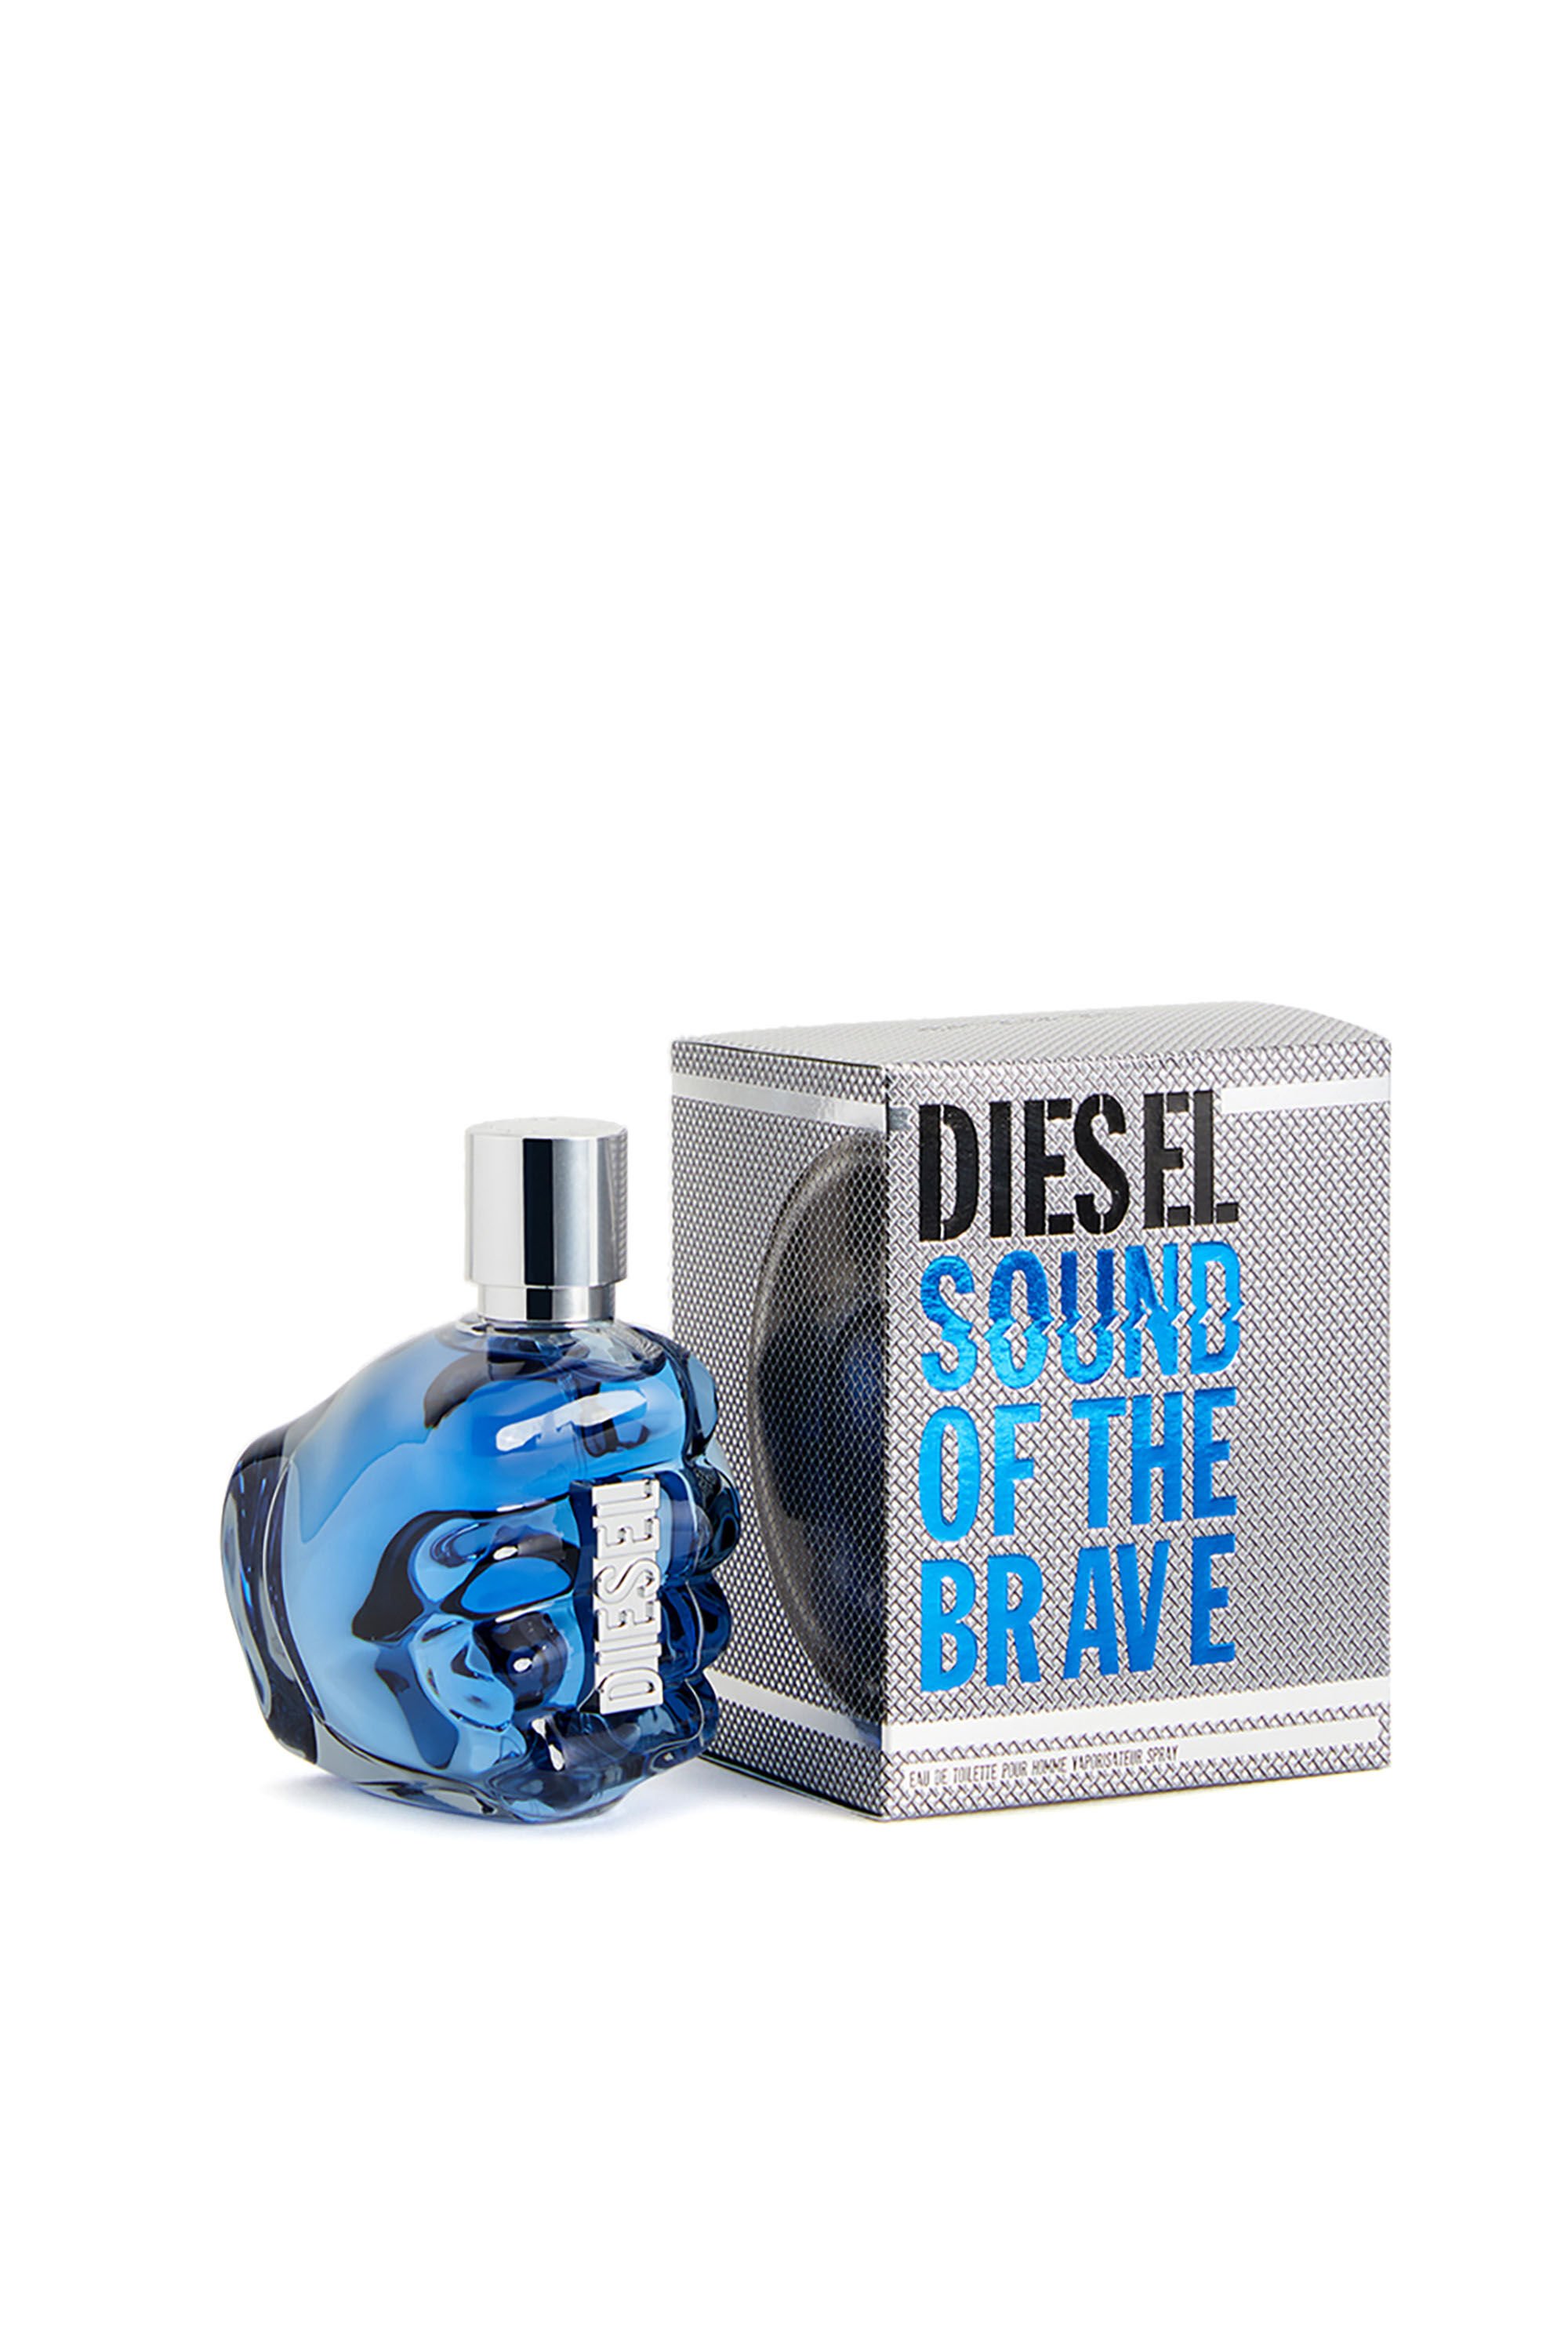 Diesel - SOUND OF THE BRAVE 50 ML, Blau - Image 3